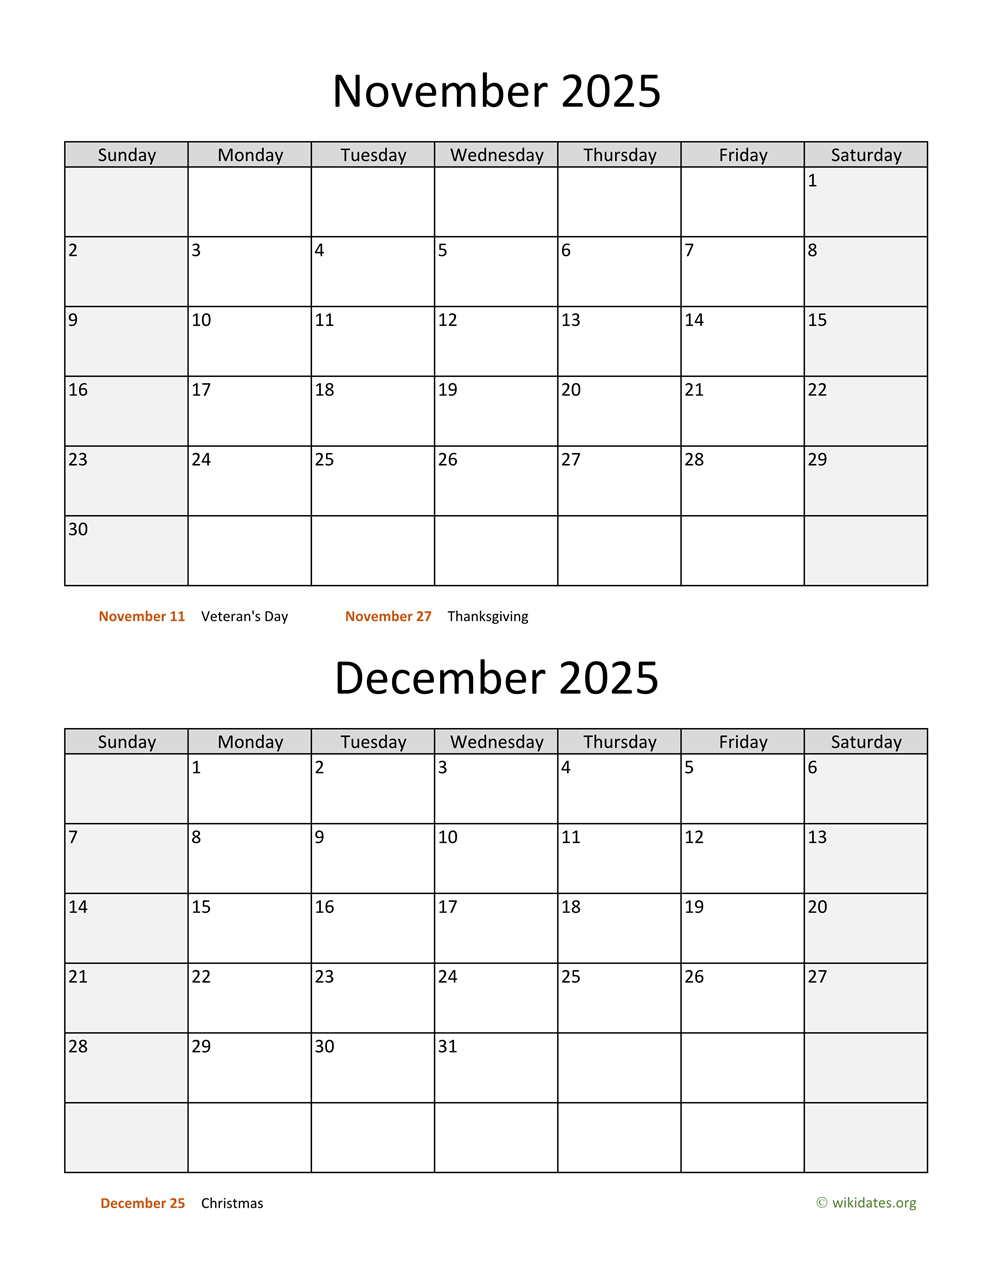 november-and-december-2025-calendar-wikidates